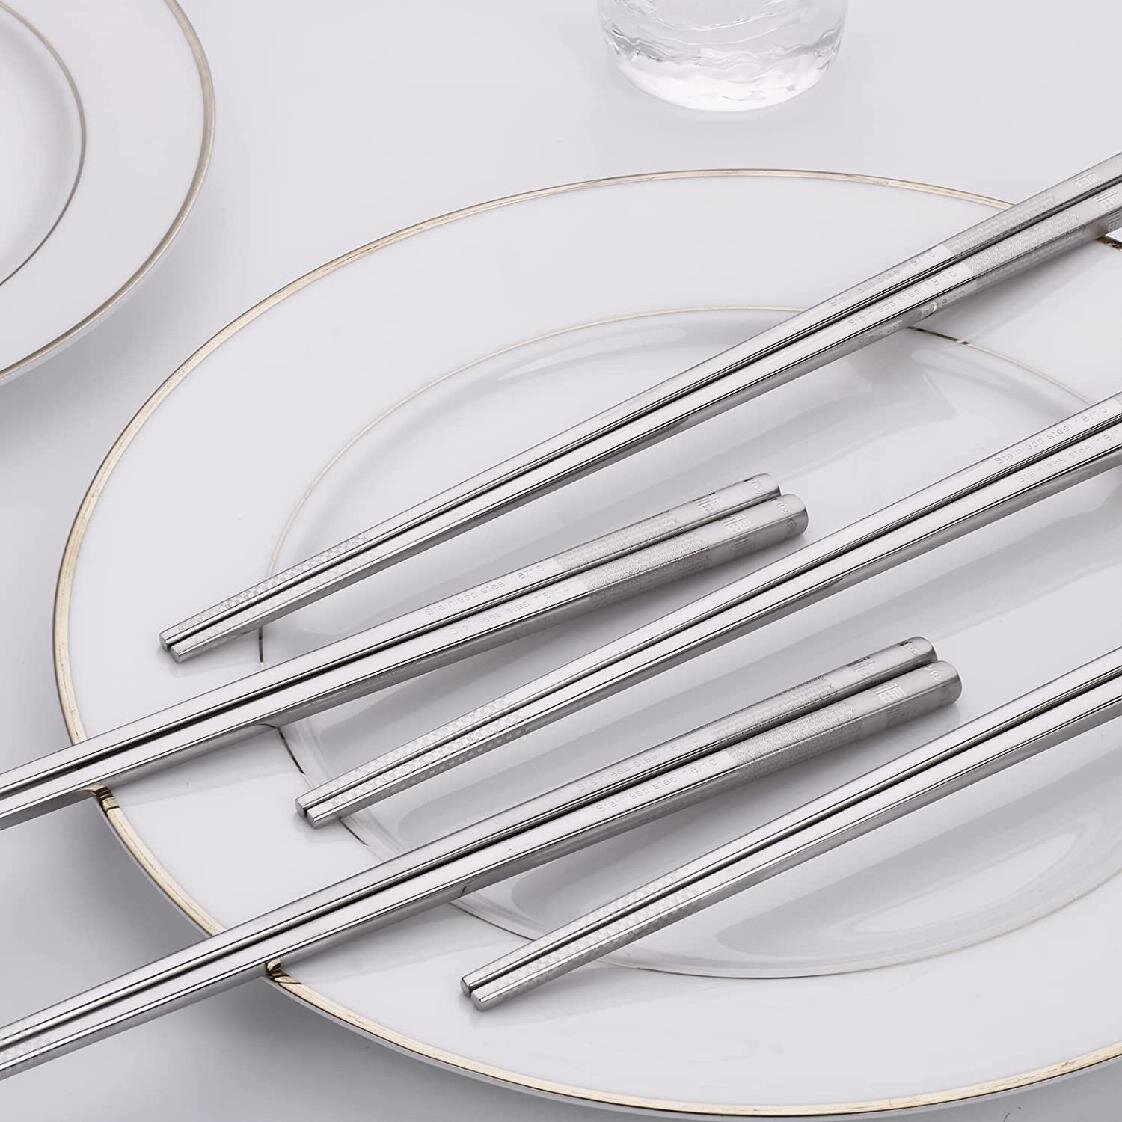 Stainless Steel Metal Chopsticks Silver Chop Stick Chinese Food Tableware S 